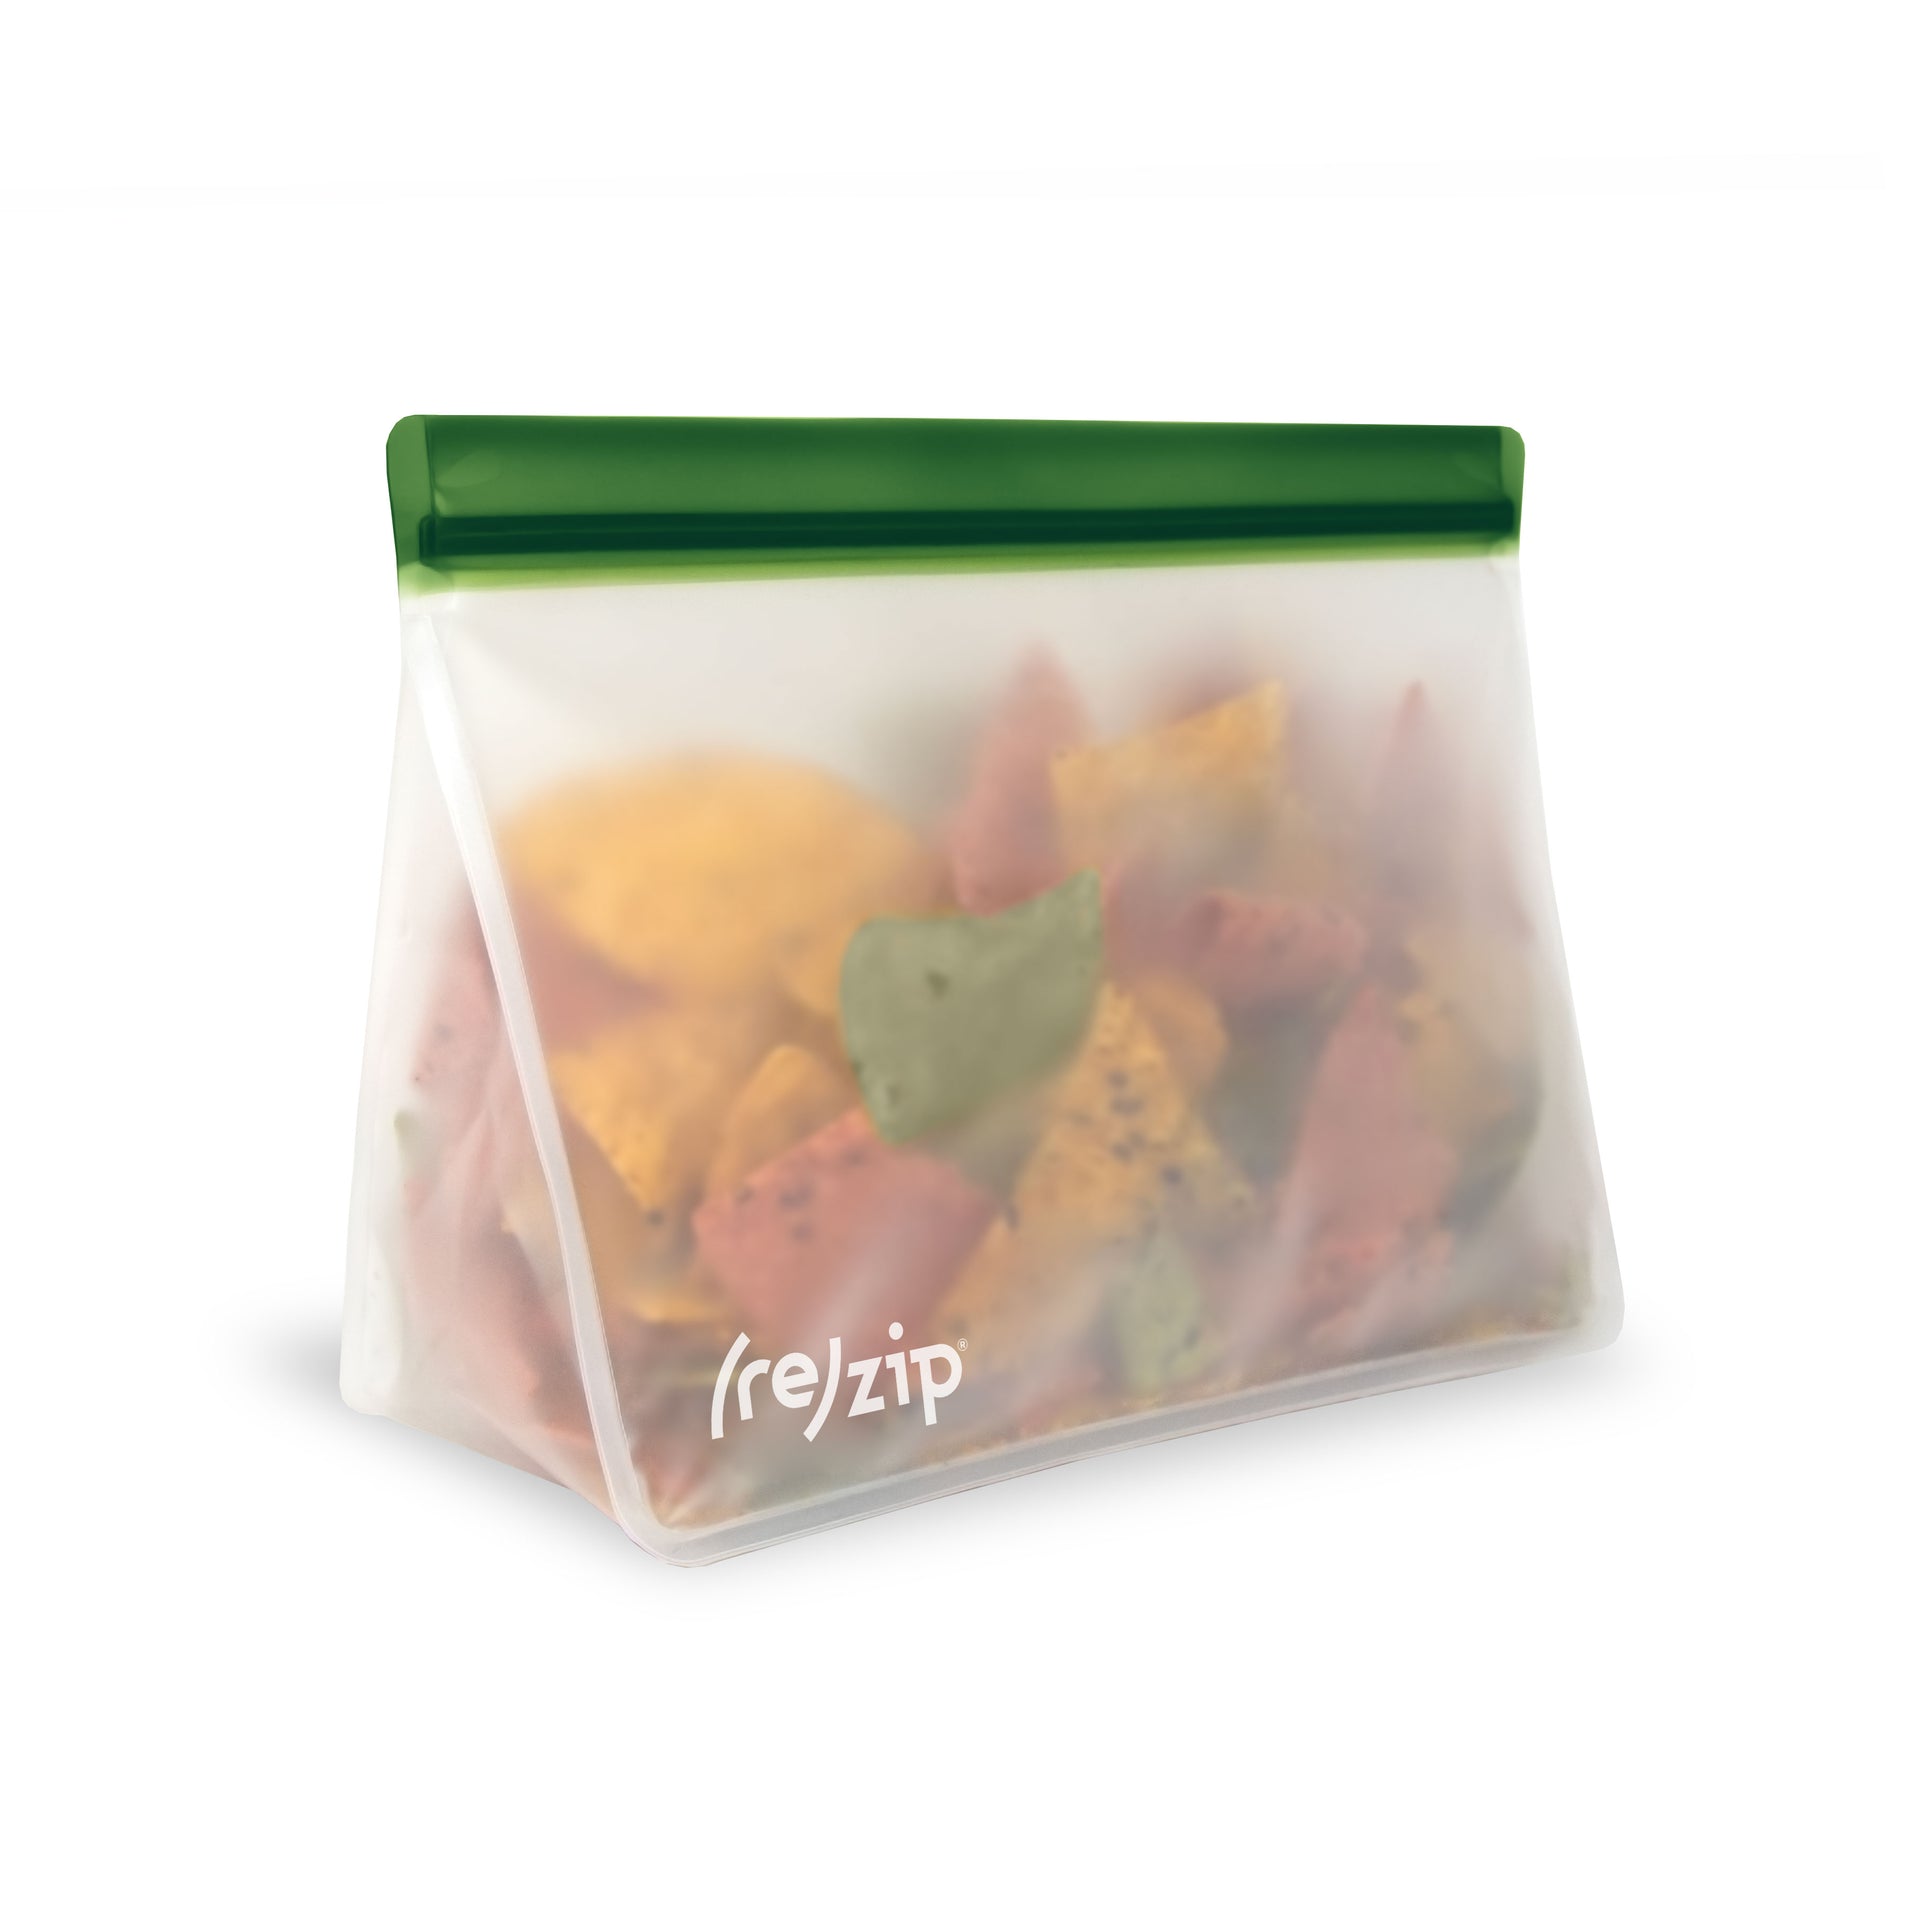 reusable leak proof freezer safe 8 cup pantry storage bag in Pine